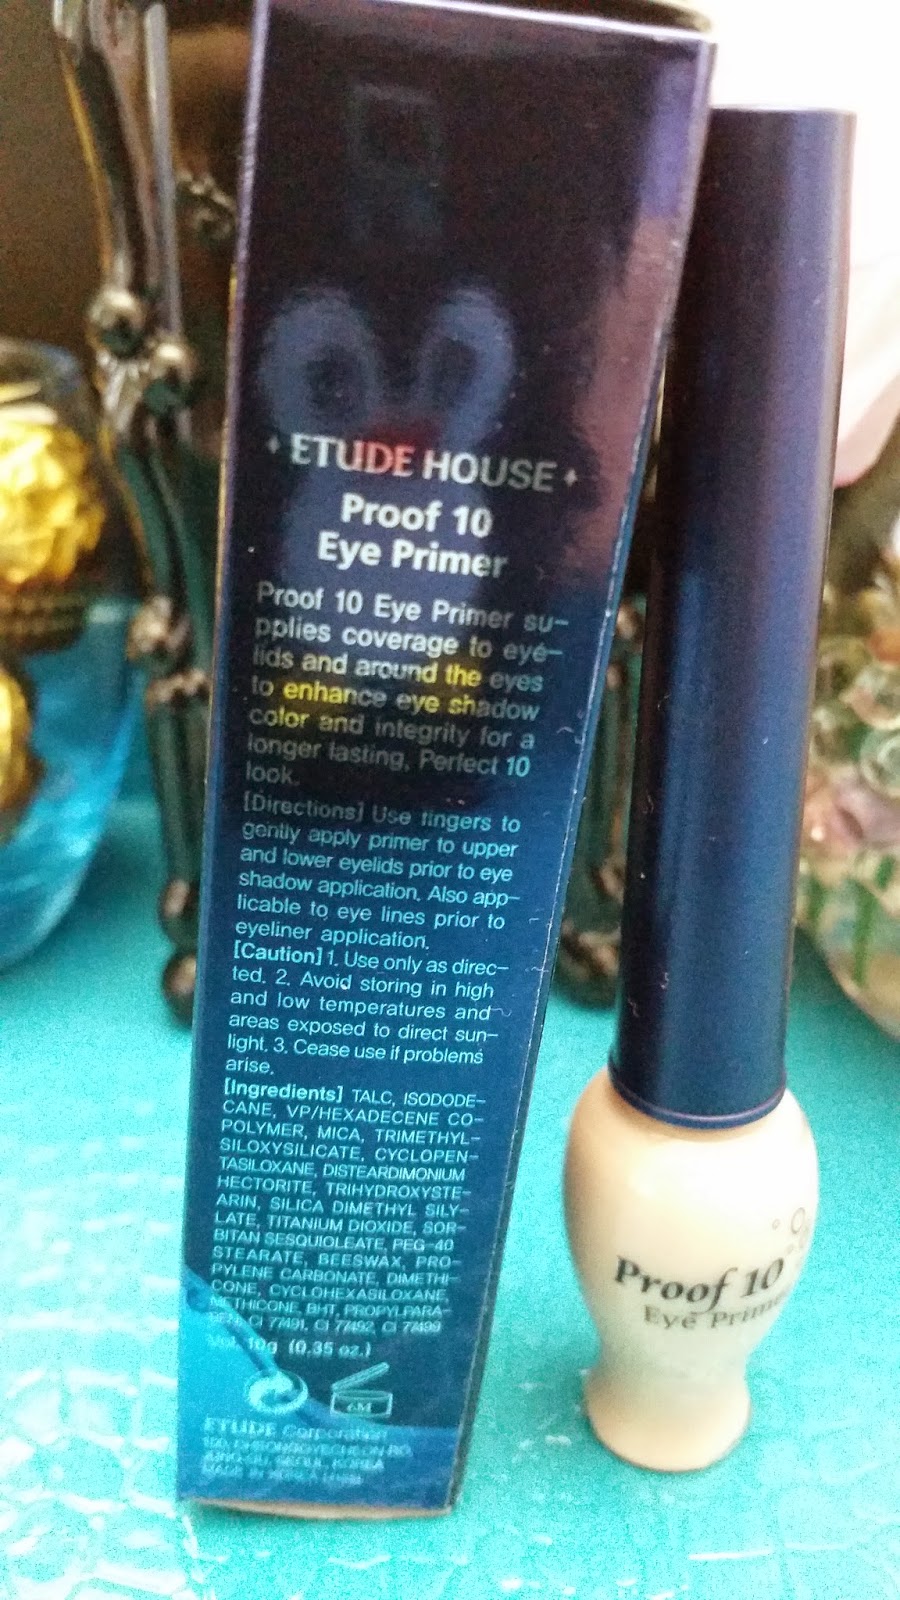 Etude House Proof 10 Eye Primer packaging